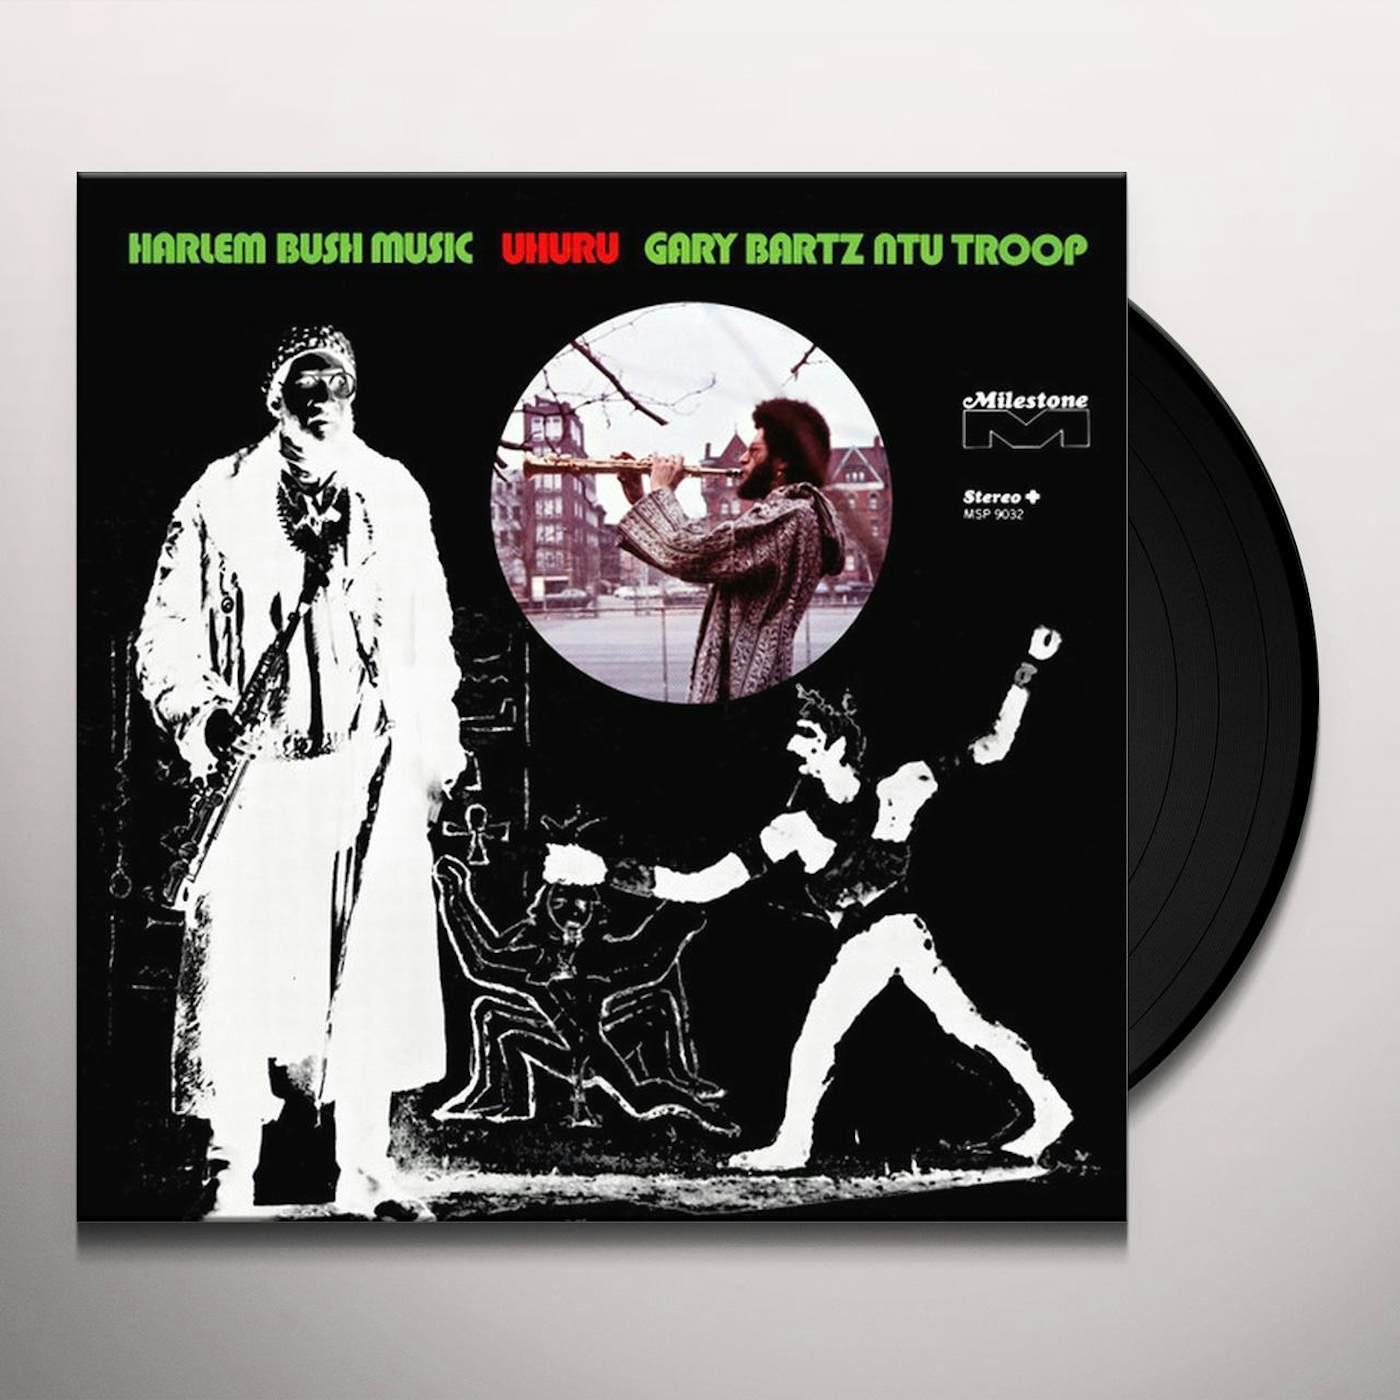 Gary Bartz Ntu Troop Harlem Bush Music - Uhuru Vinyl Record